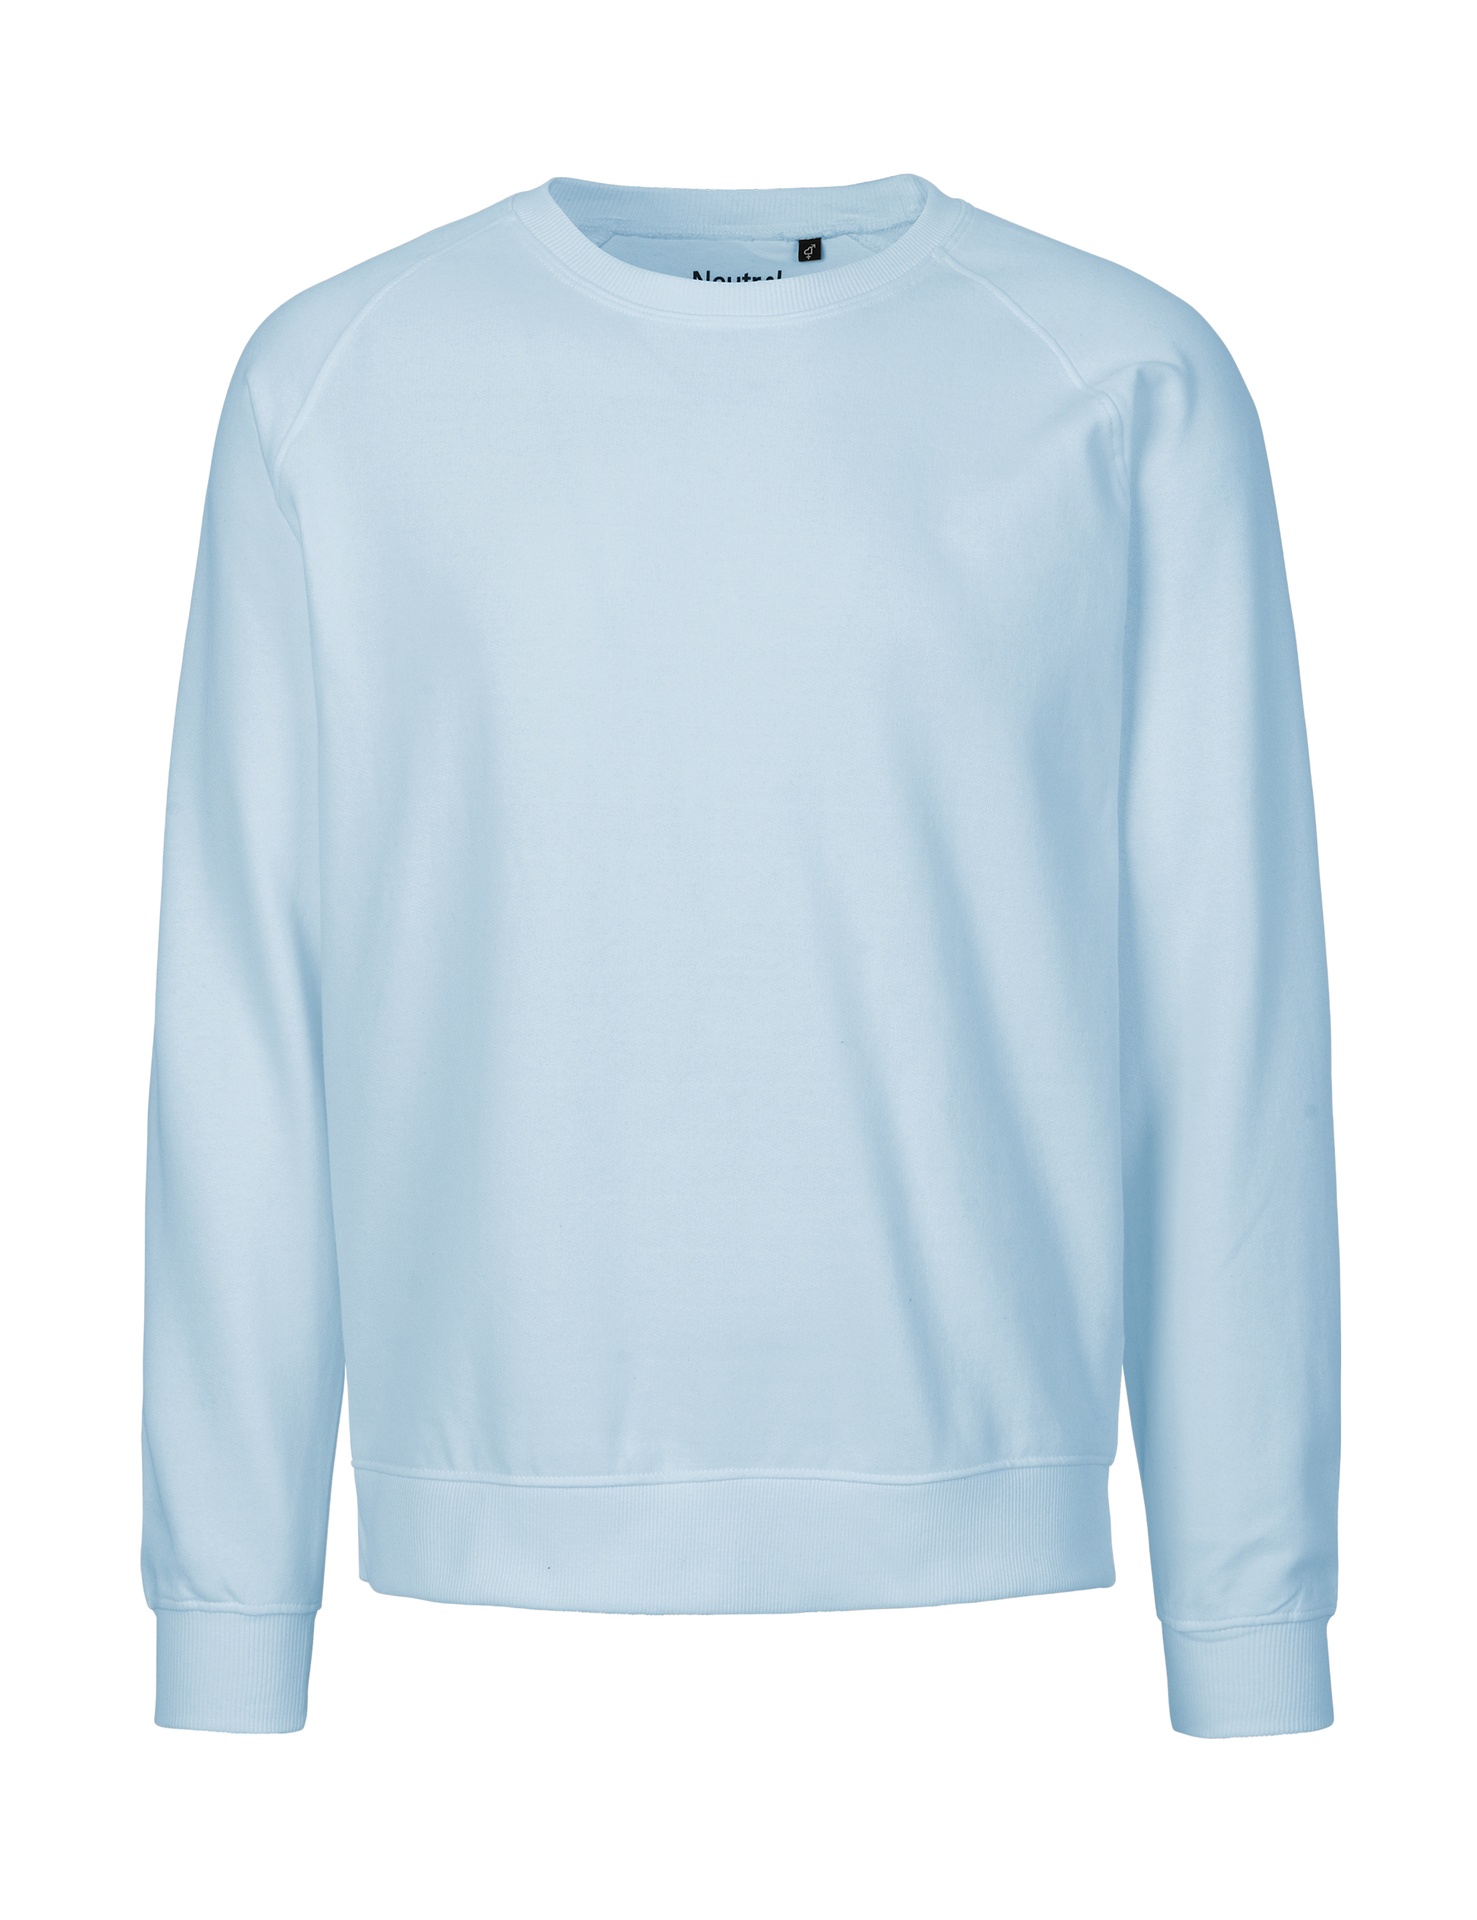 [PR/02890] Unisex Sweatshirt (Light Blue 69, XL)